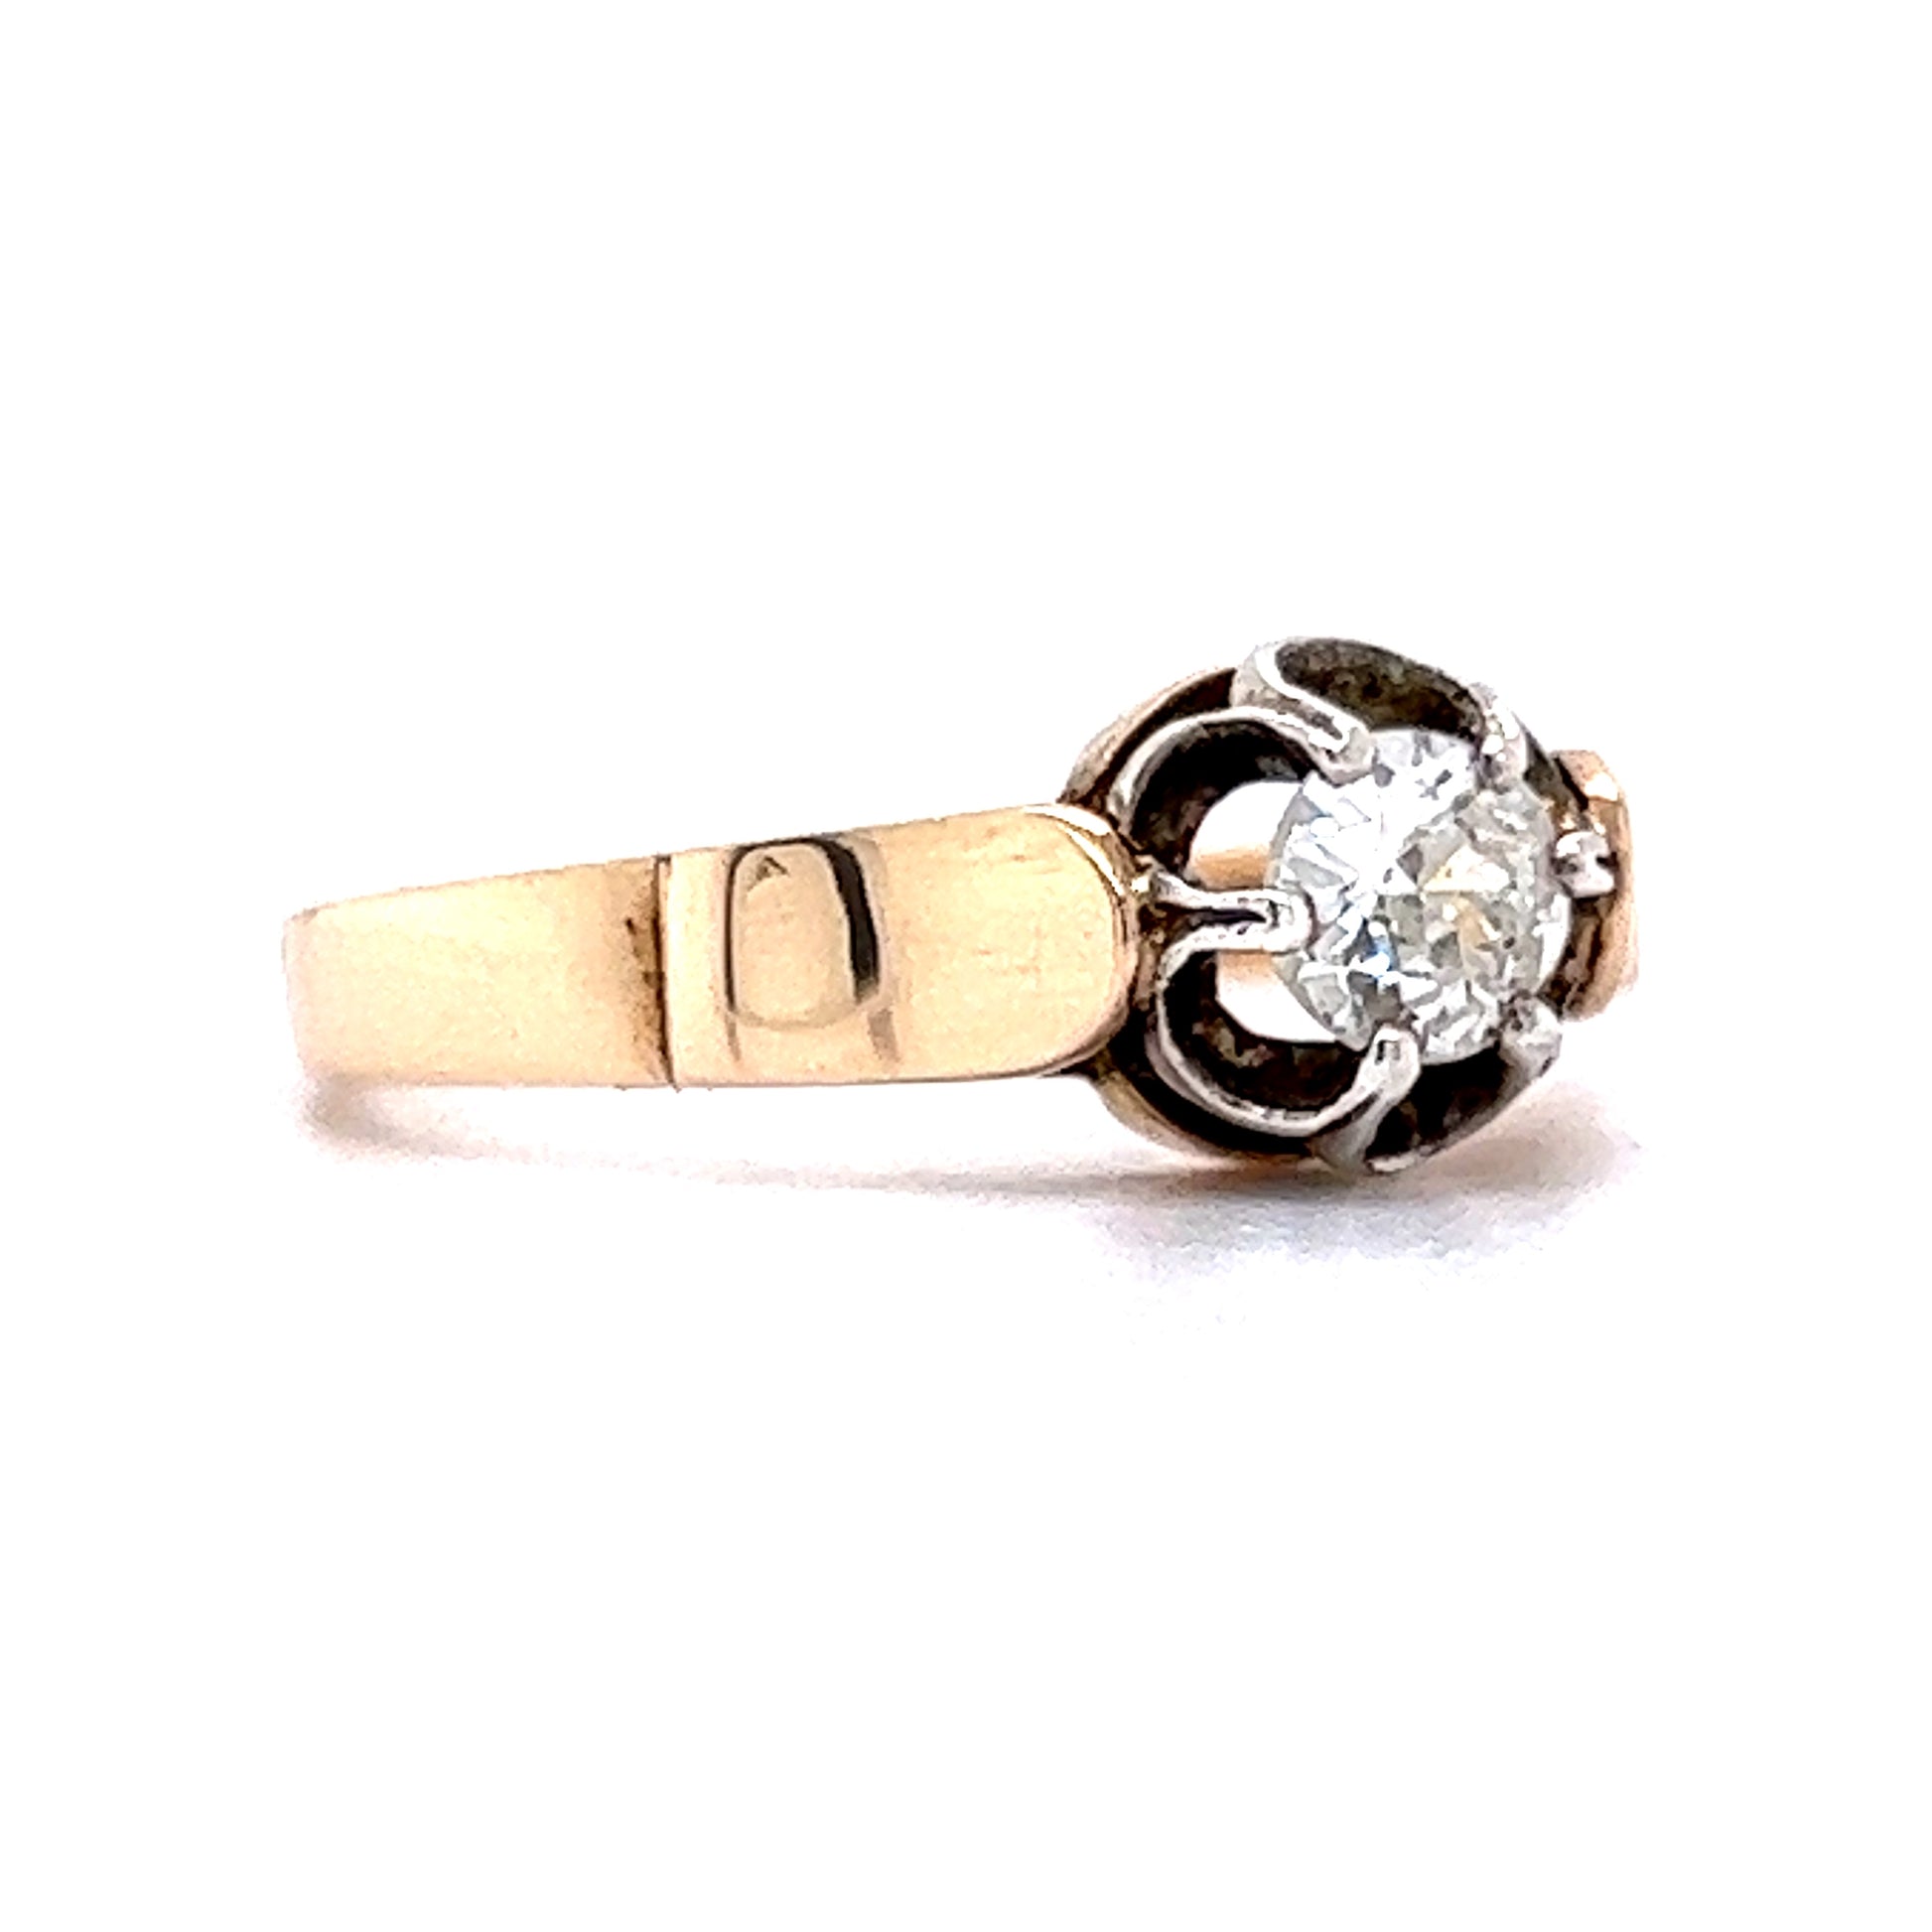 .36 Victorian Solitaire Diamond Engagement Ring in 18K Rose GoldComposition: 14 Karat White Gold/18 Karat Rose Gold Ring Size: 7 Total Diamond Weight: .36ct Total Gram Weight: 2.9 g Inscription: WK
      